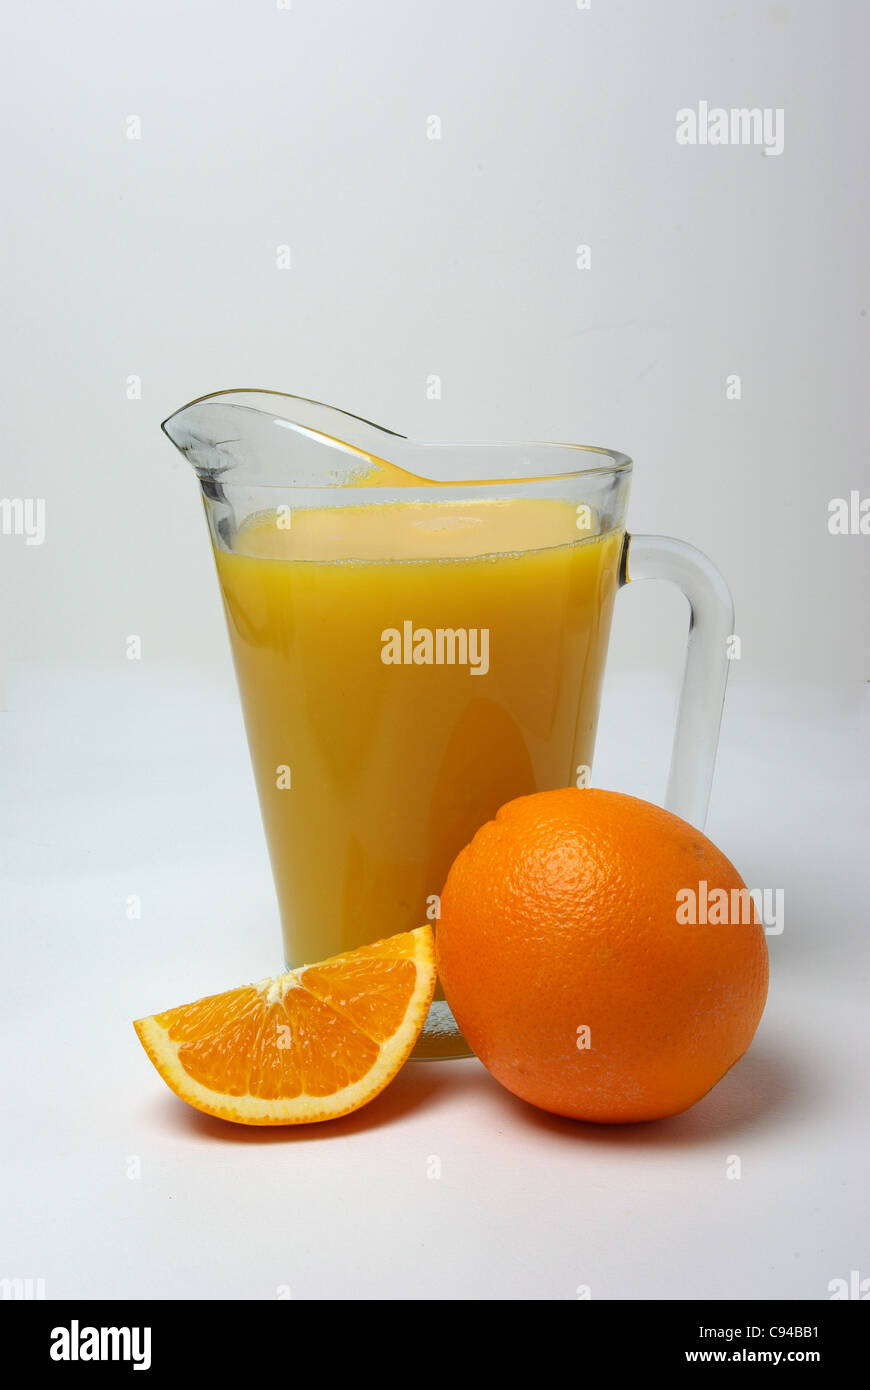 https://c8.alamy.com/comp/C94BB1/a-pitcher-of-orange-juice-sits-beside-a-orange-and-a-slice-of-orange-C94BB1.jpg